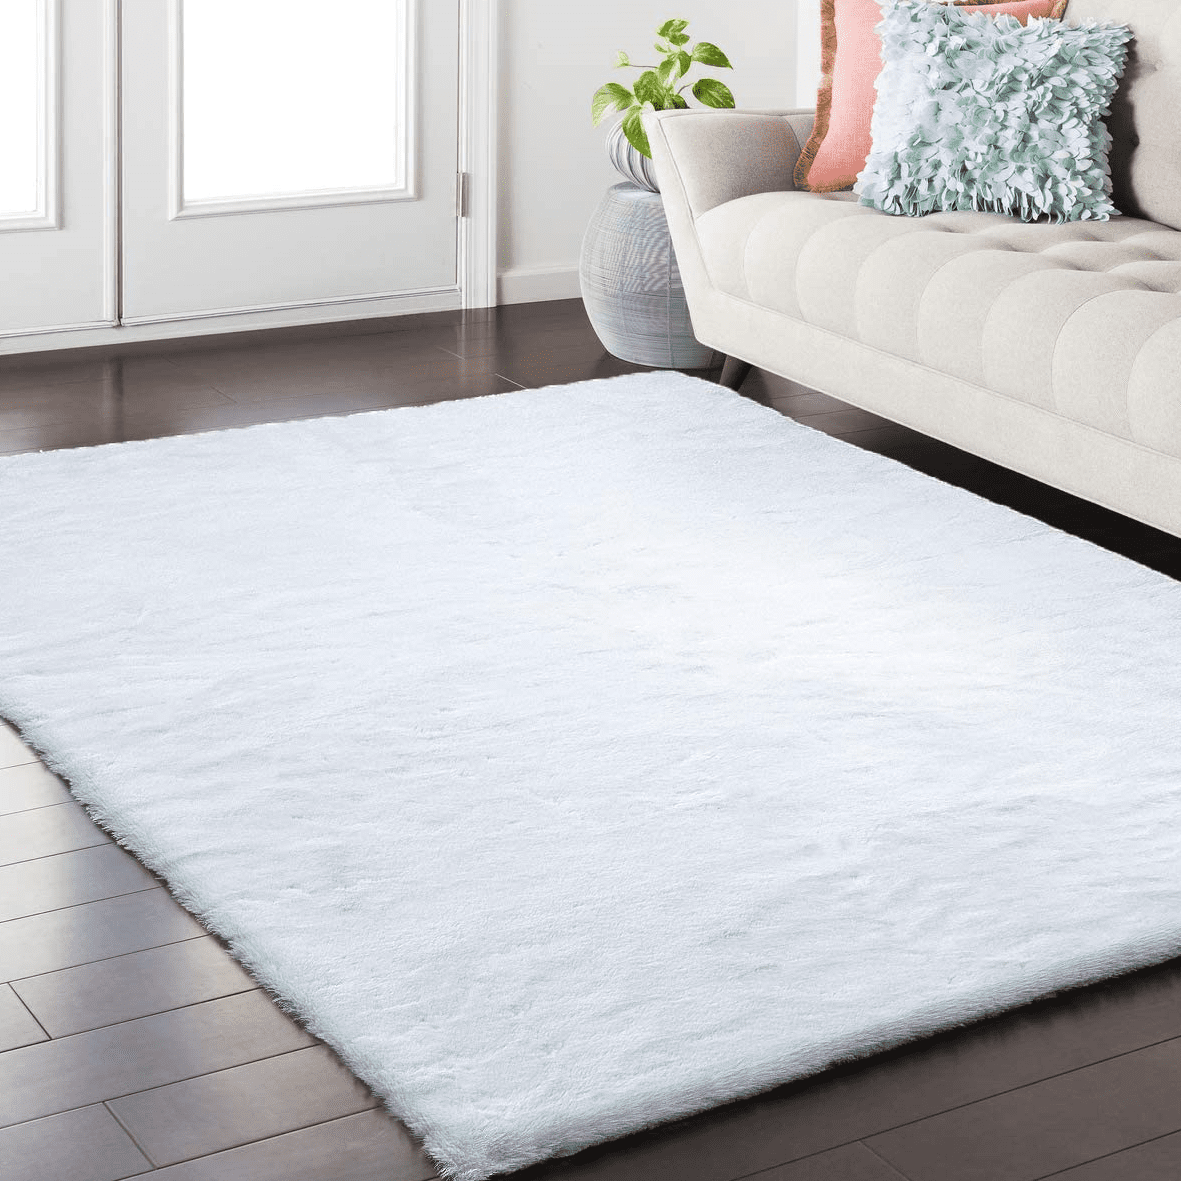 Premium Faux Fur Area Rug, Fluffy Rabbit Shag Carpet